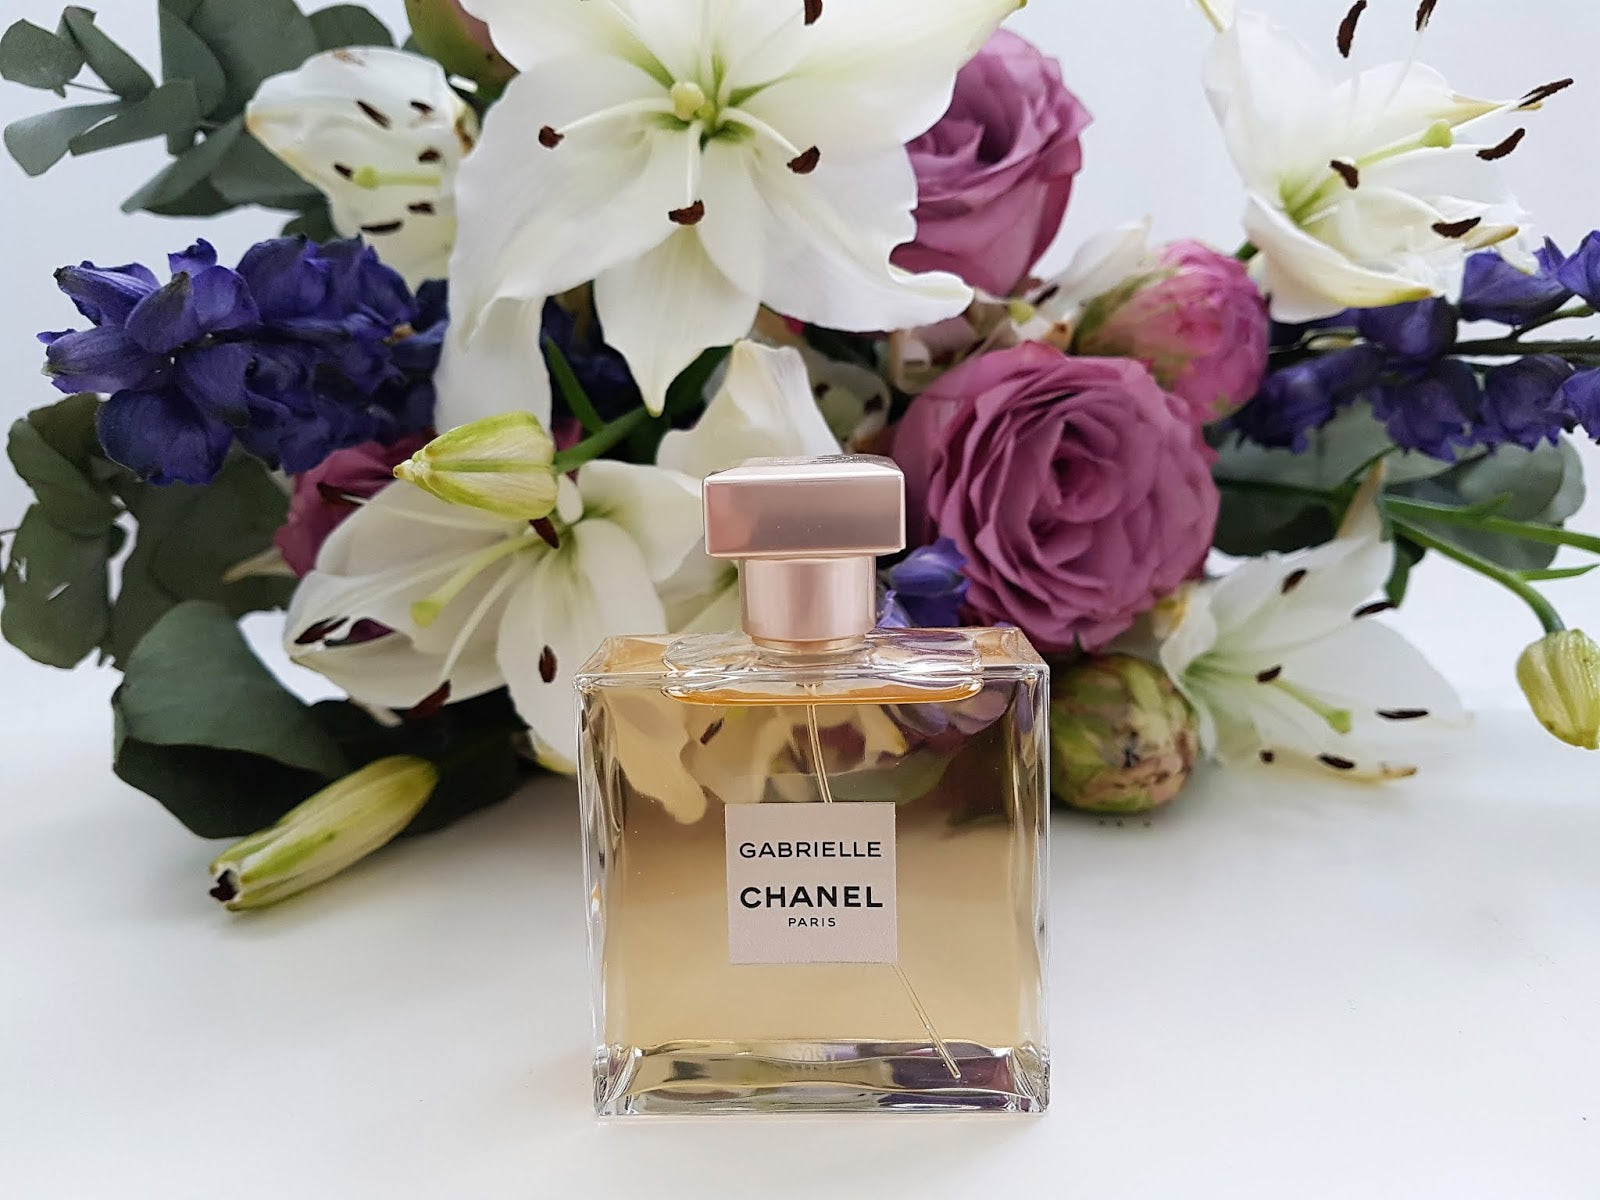 Amazoncom  CHANEL Gabrielle Essence Eau de Parfum Perfume 005 oz  15  ml Sample Spray  Beauty  Personal Care